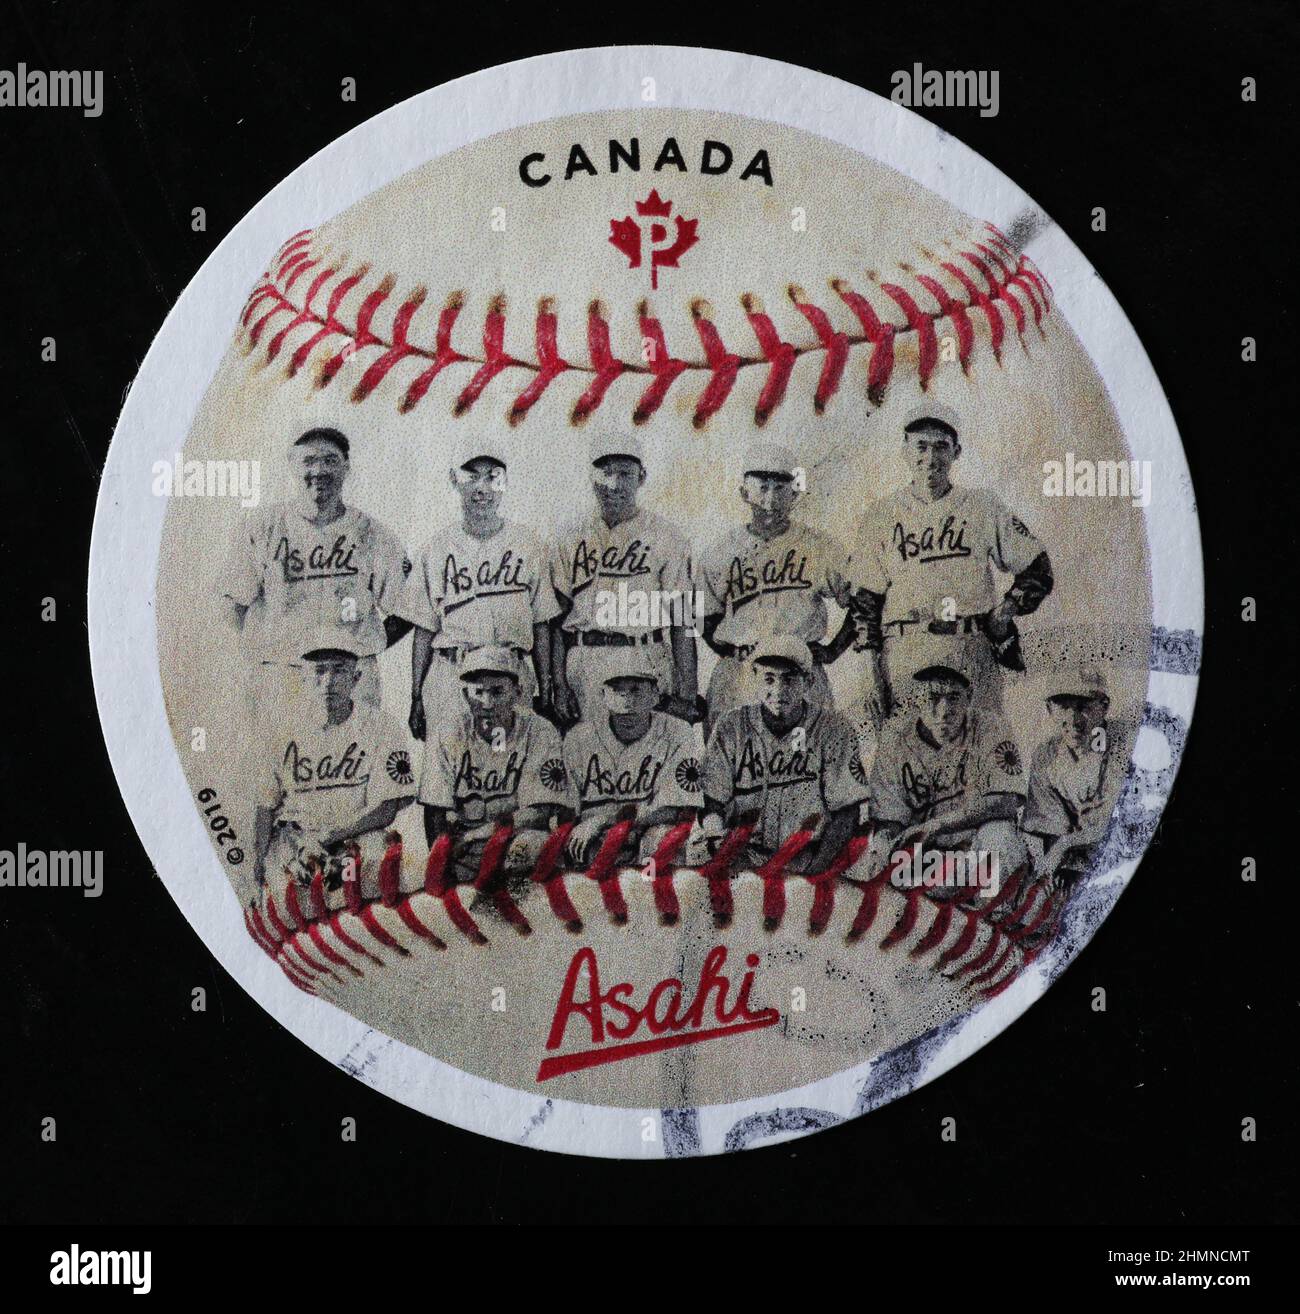 Asahi Baseball Club of 20th century on canadian postage stamp Stock Photo